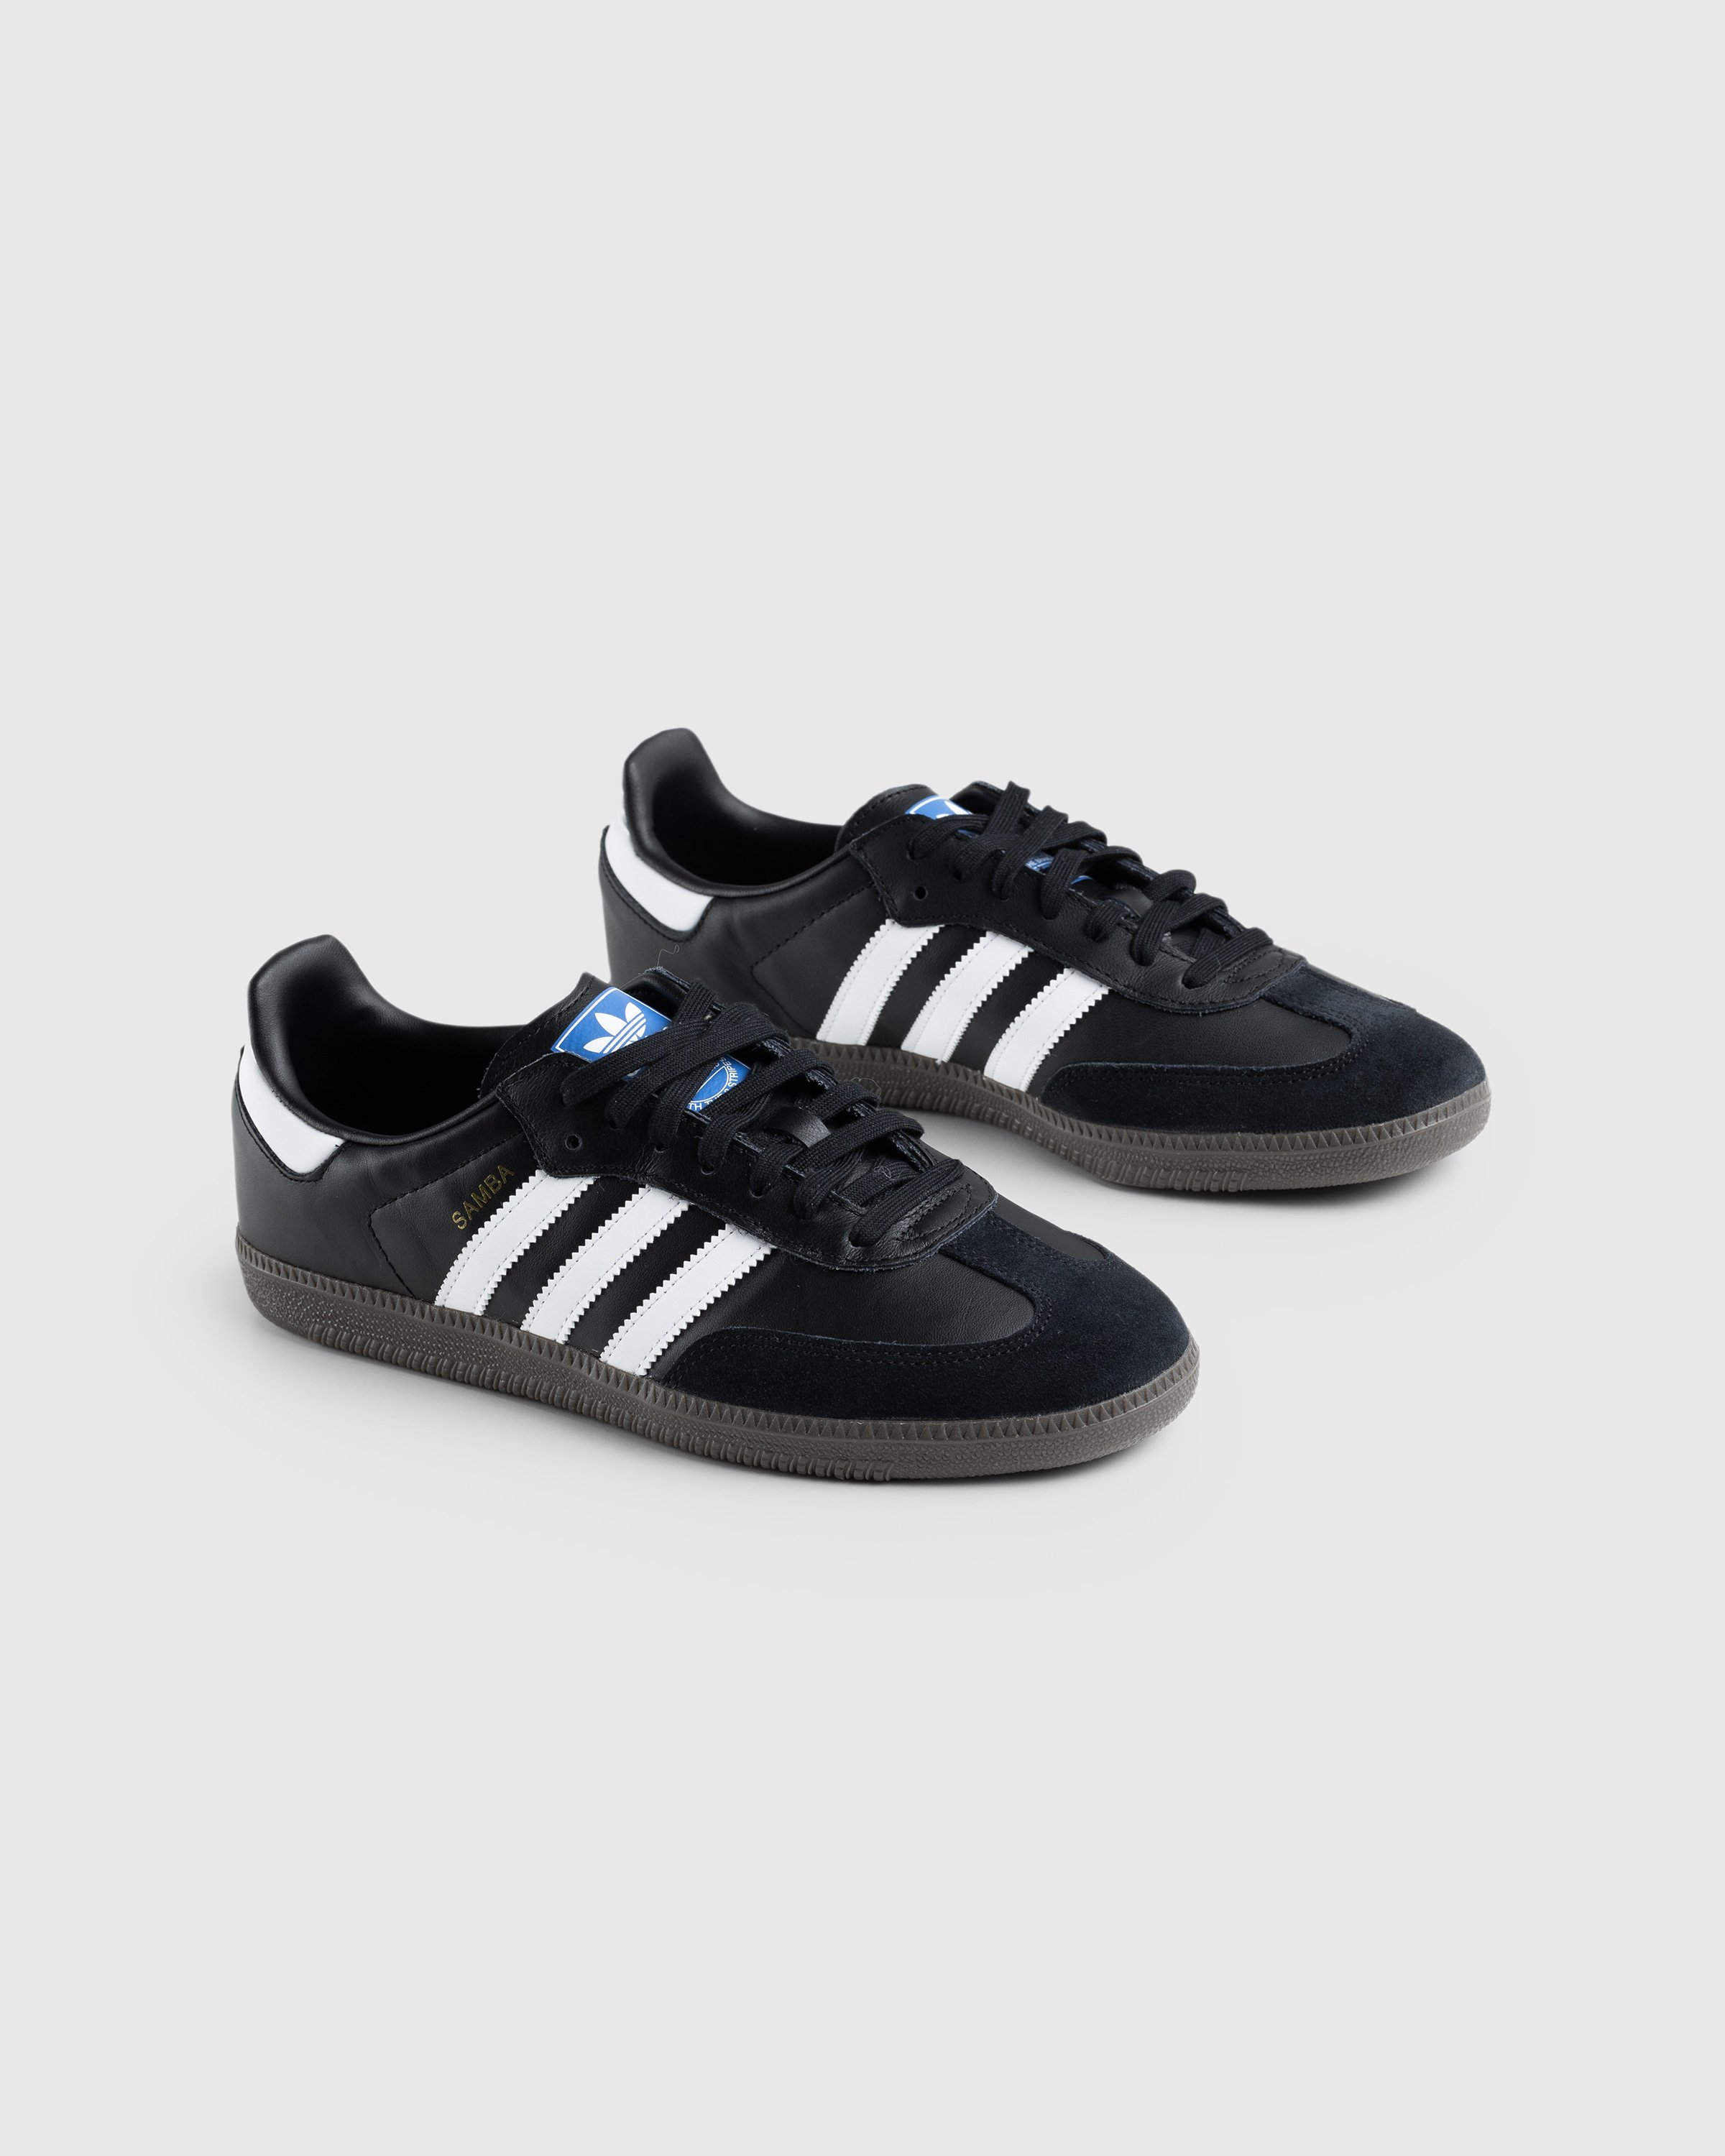 Adidas - Samba OG Black/White/Gum - Footwear - Black - Image 3